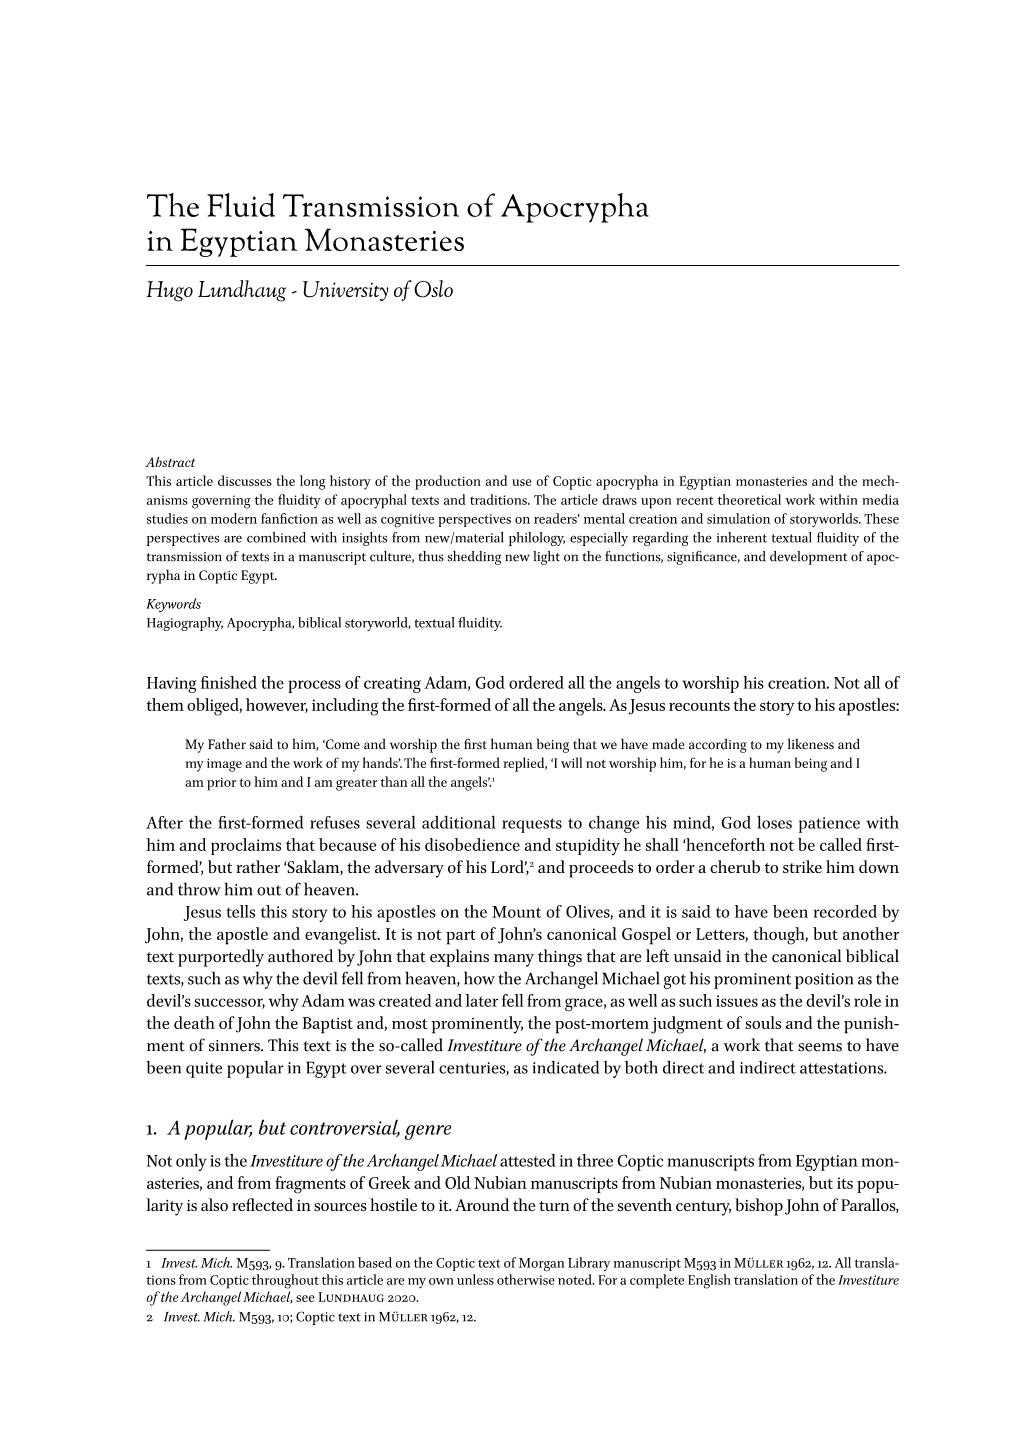 The Fluid Transmission of Apocrypha in Egyptian Monasteries Hugo Lundhaug - University of Oslo